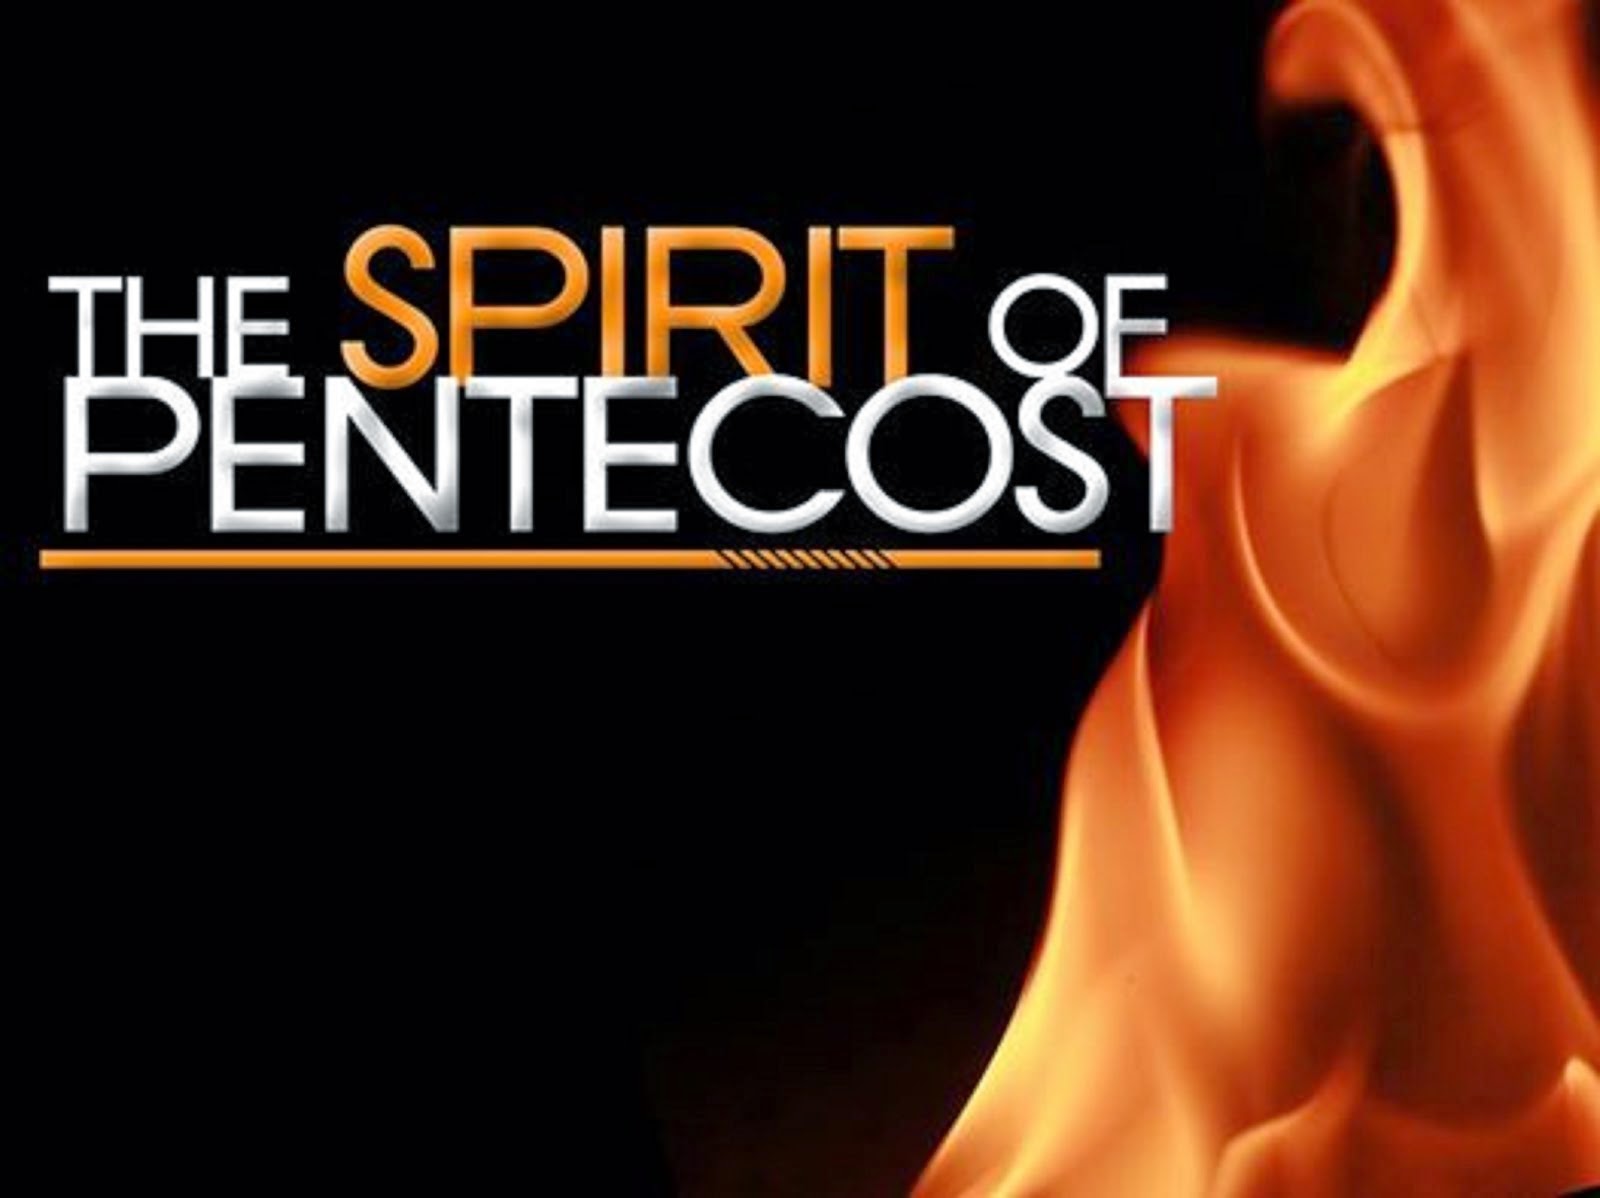 THE SPIRIT OF PENTECOST